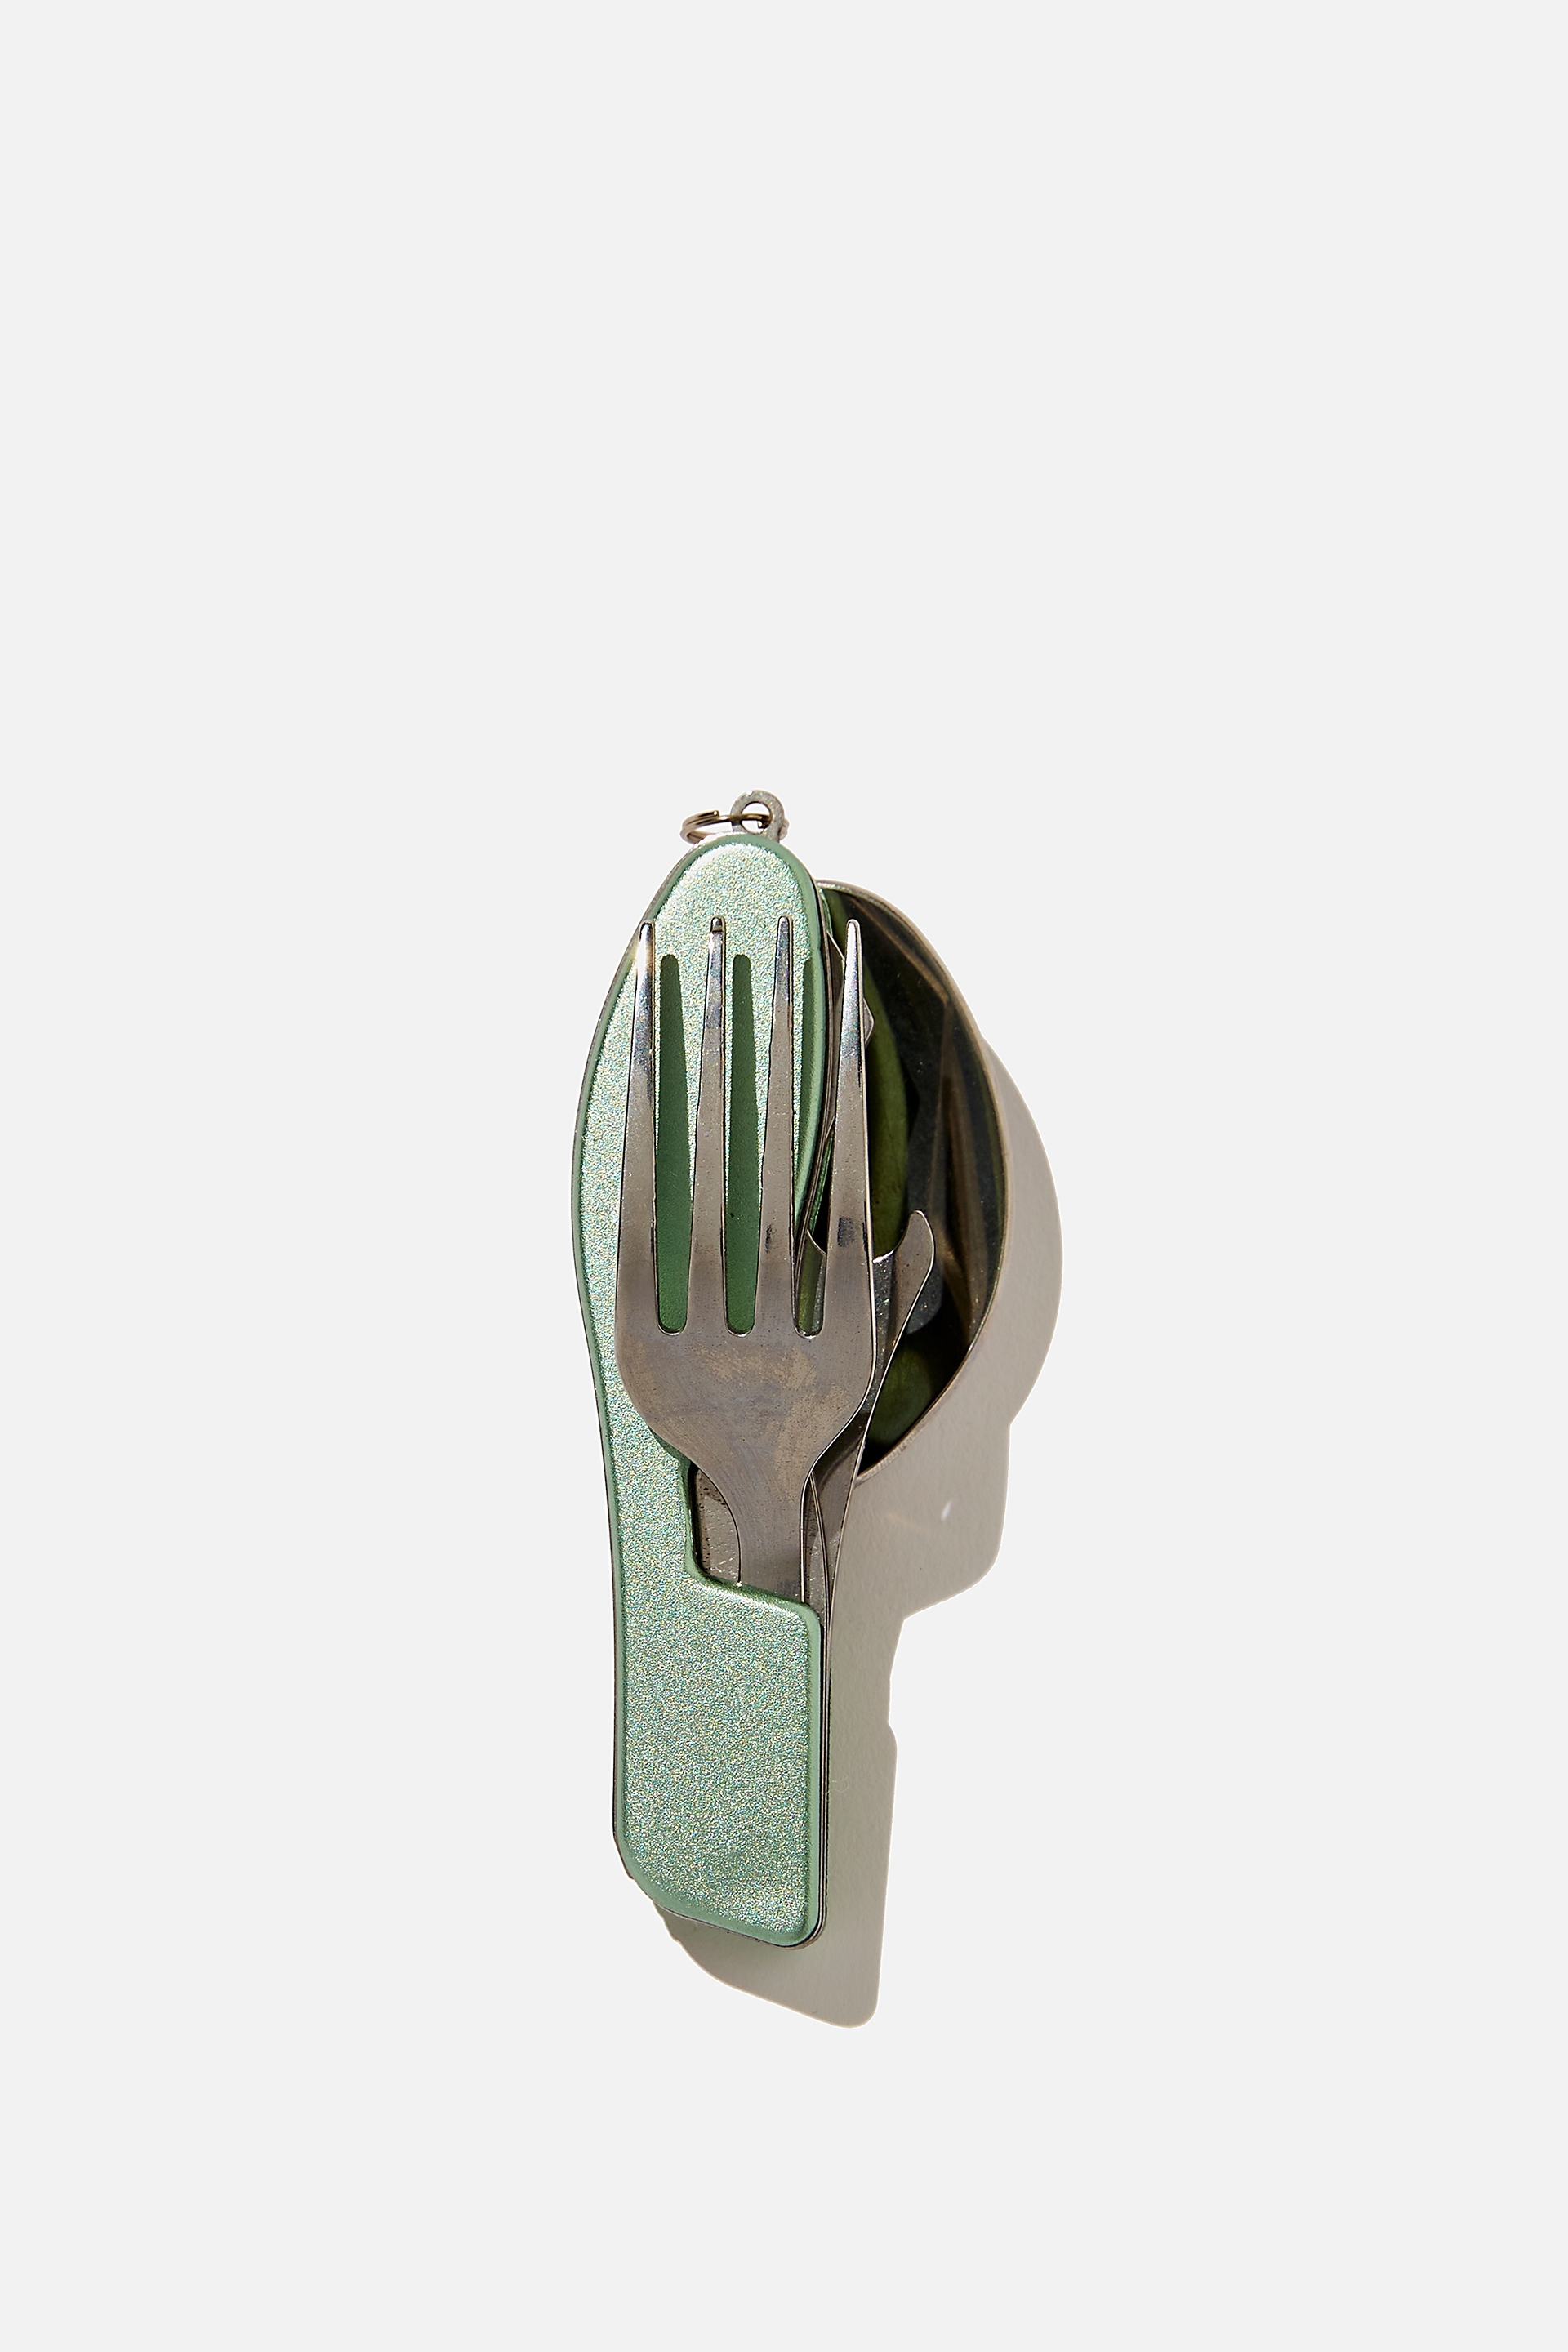 Typo - Pocket Cutlery Set - Pistachio